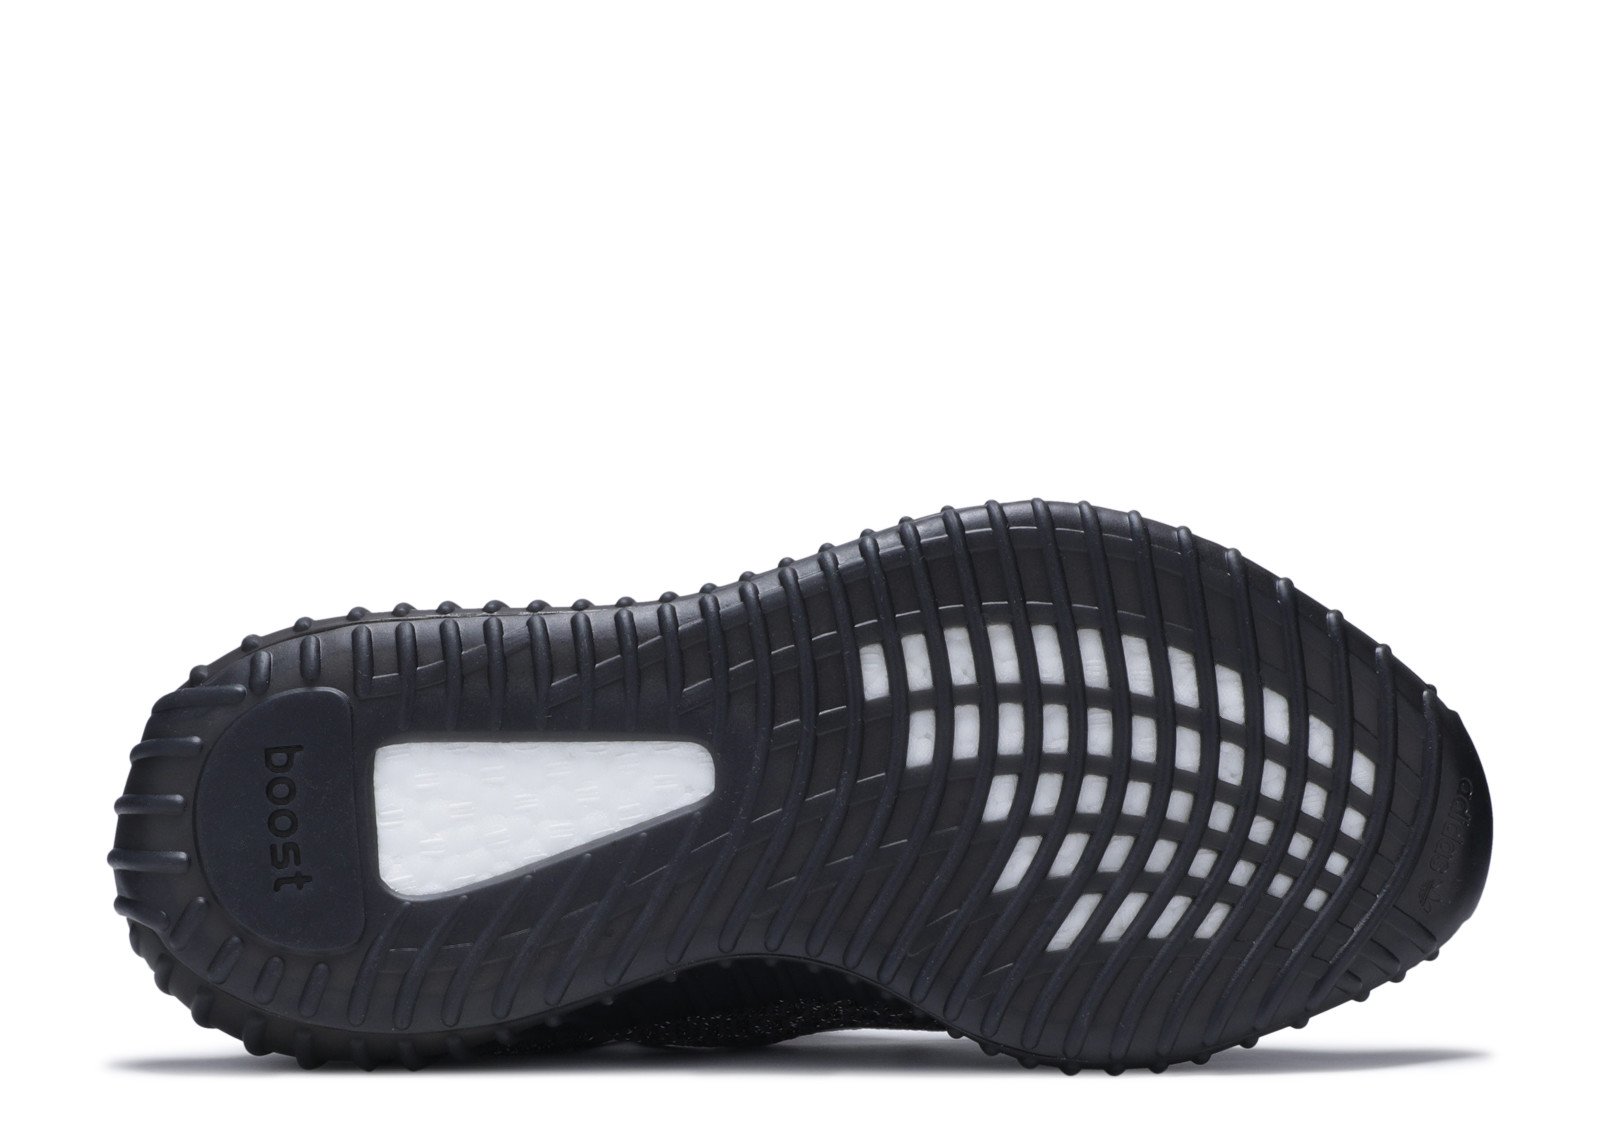 Adidas Yeezy Boost 350 V2 Static Black Reflective